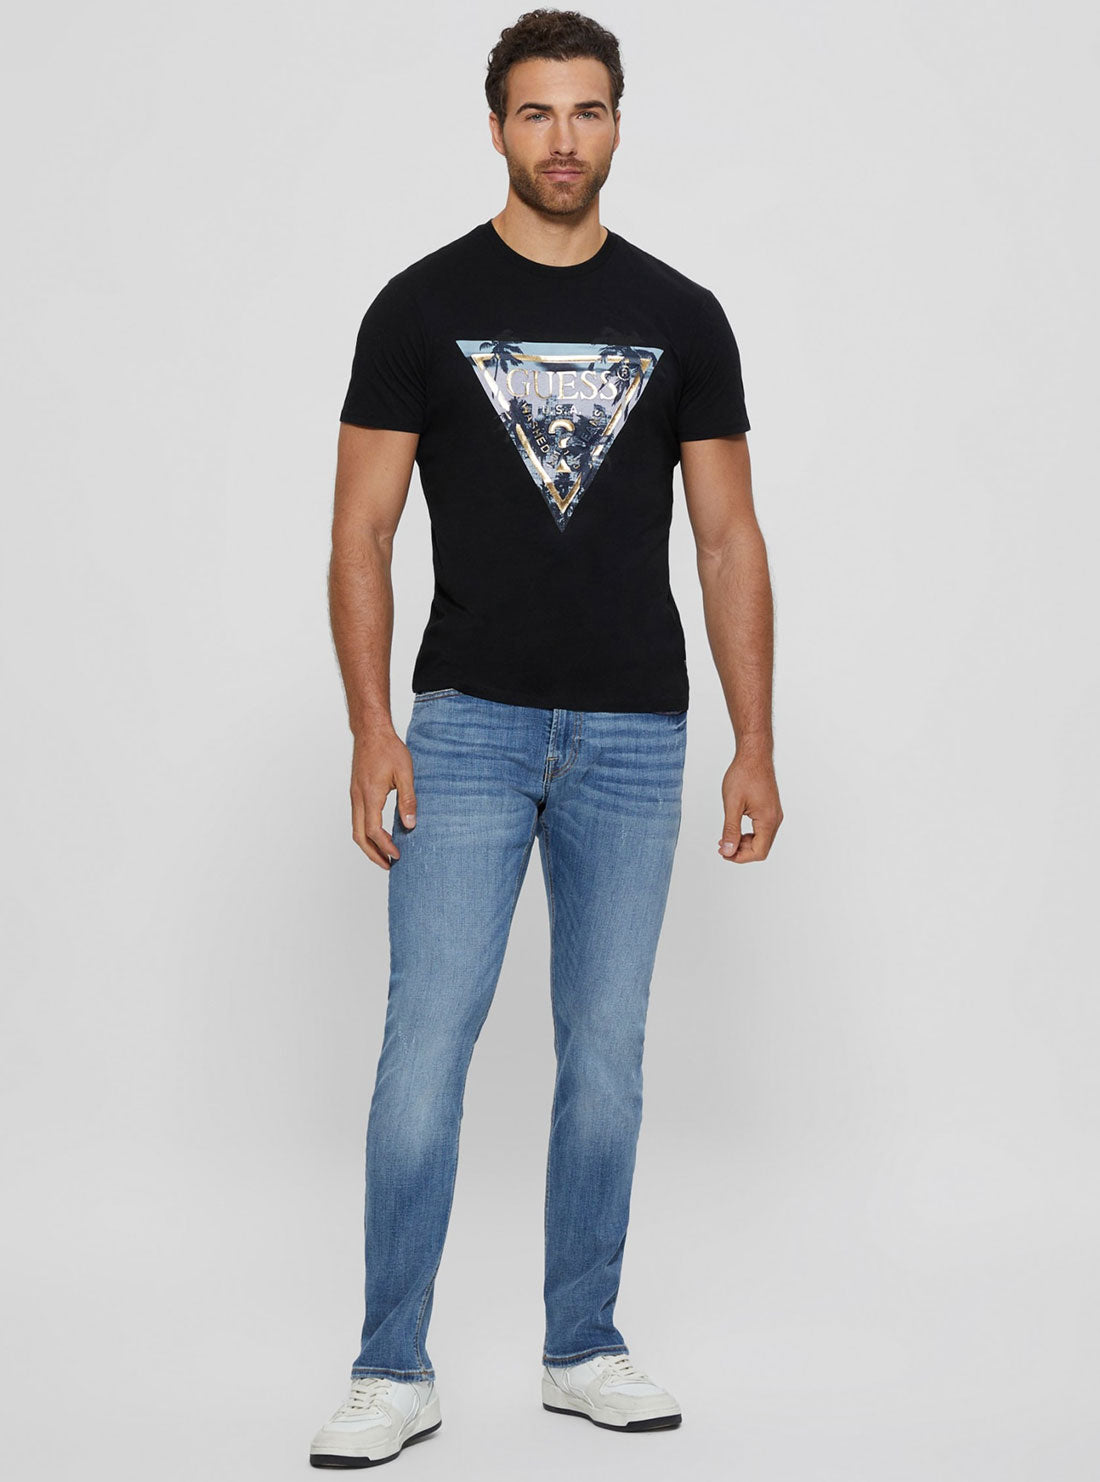 Black Palm Print Triangle Logo T-Shirt | GUESS Men's Apparel | full view